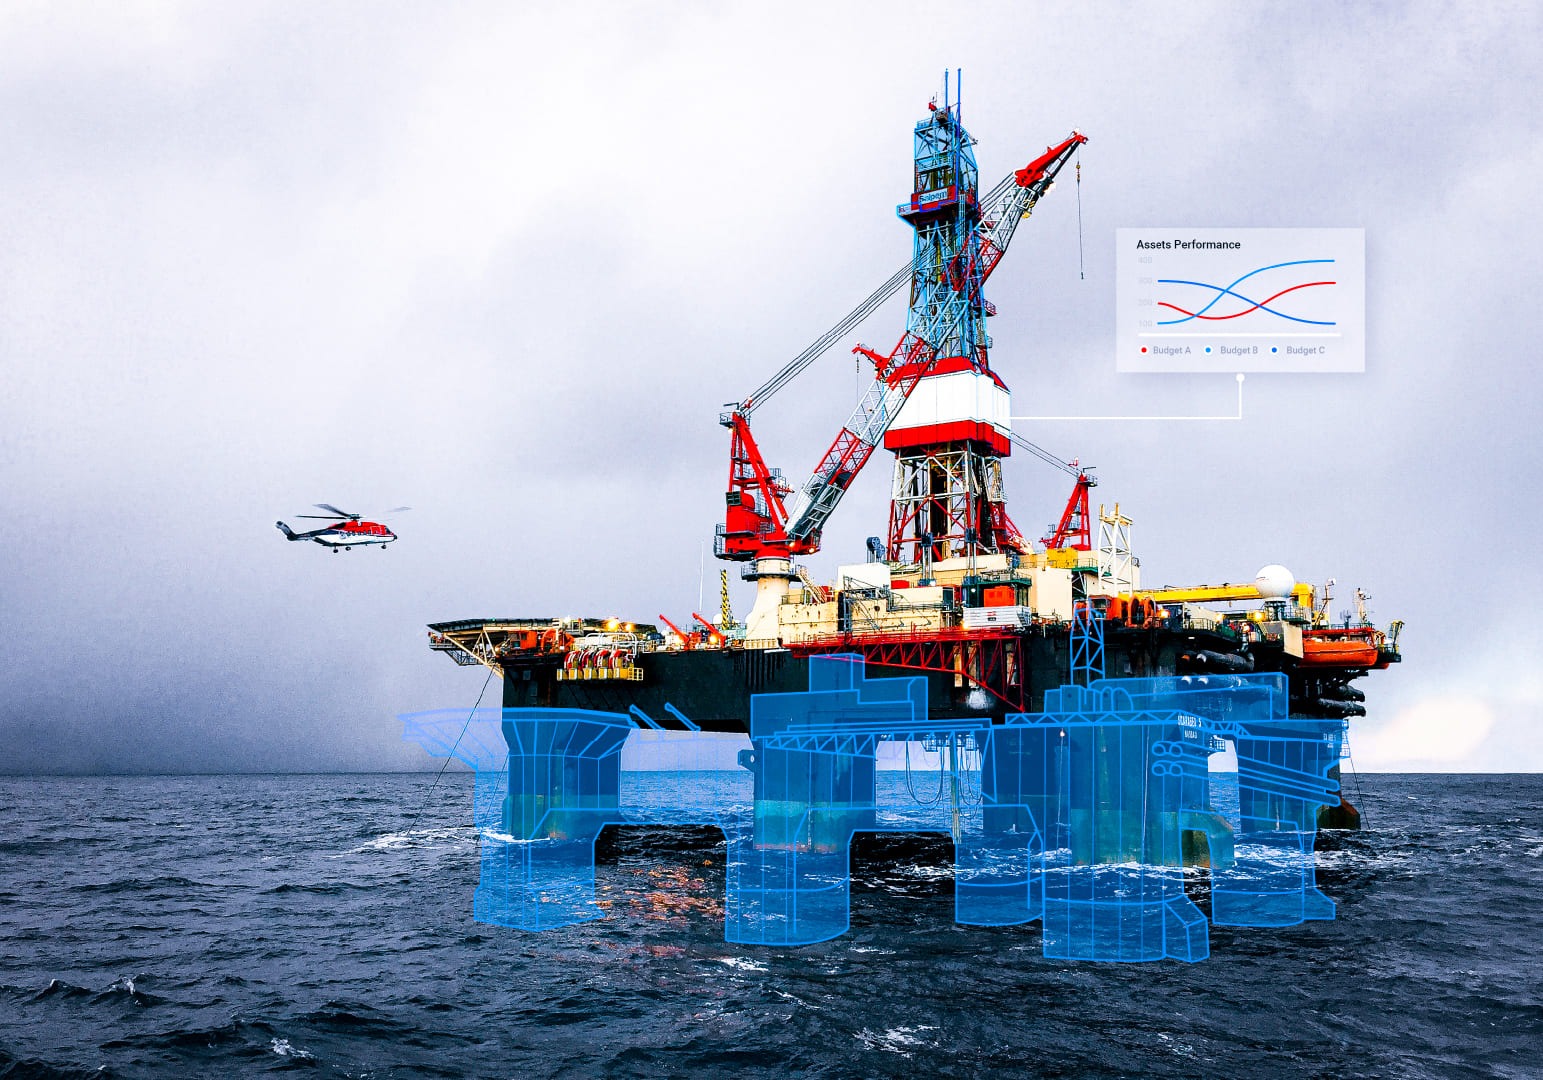 Offshore Oil Rig Digital Twin representation